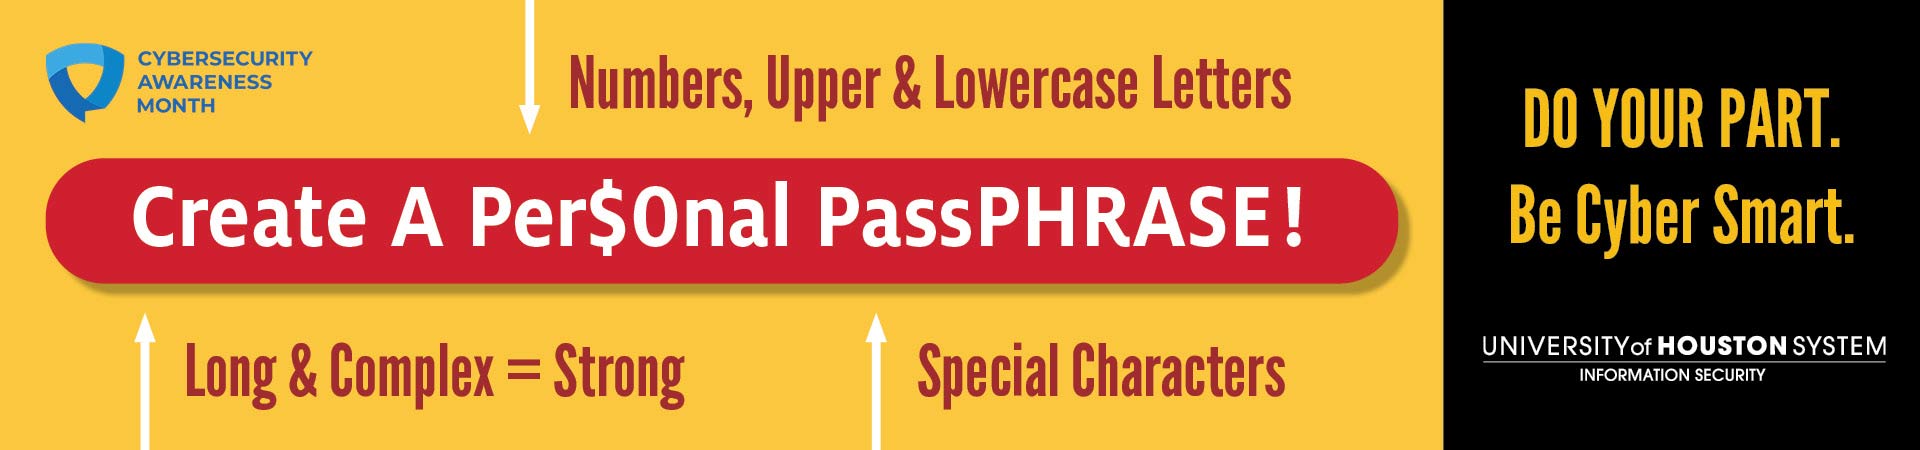 Create a personal passphrase